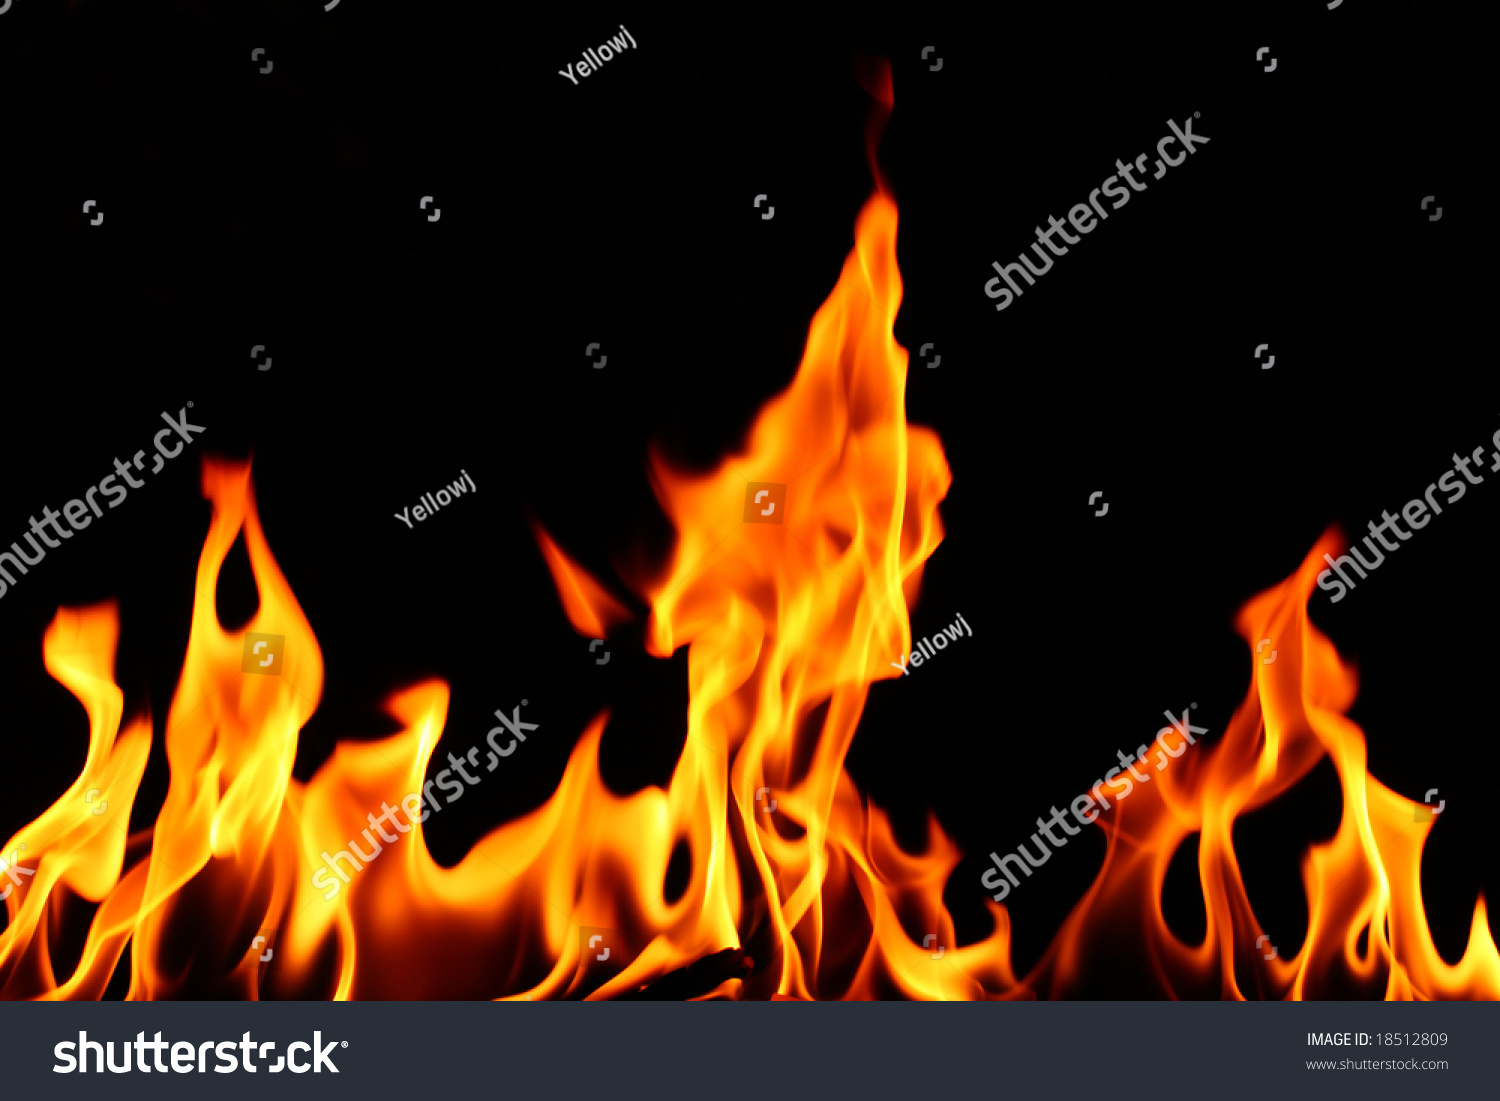 Fire Flame Stock Photo 18512809 : Shutterstock